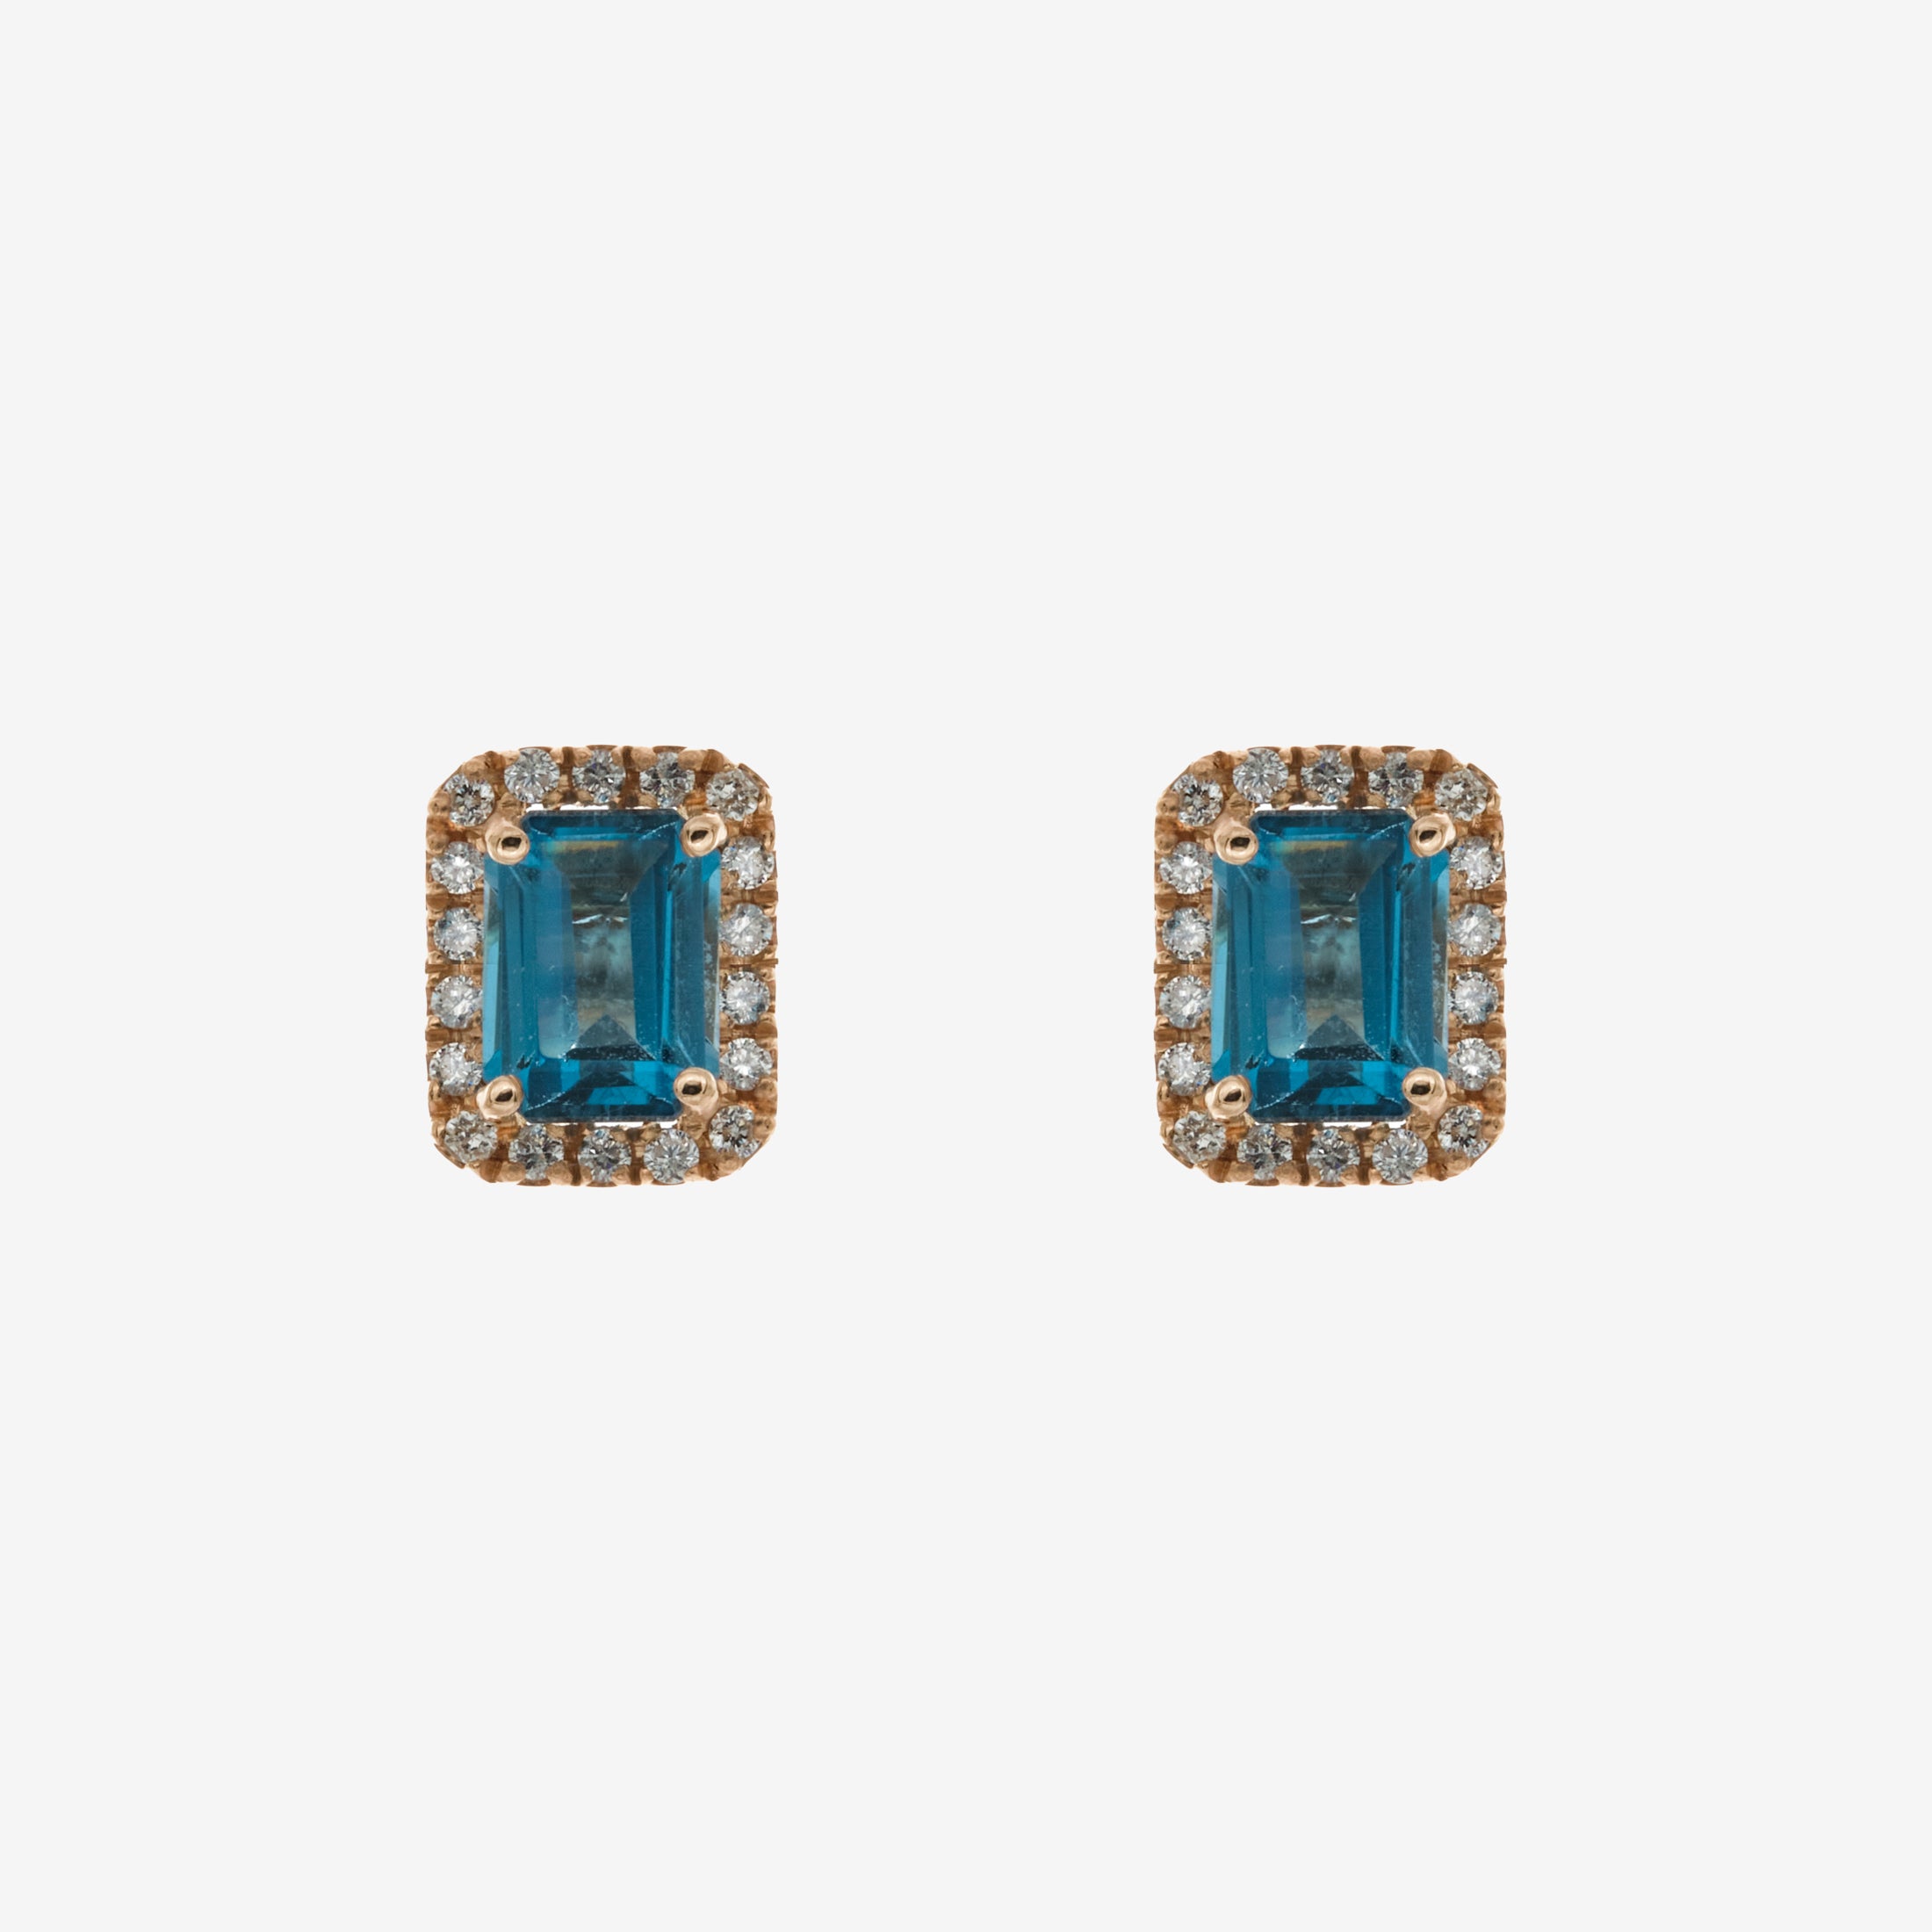 Esha earrings with London topaz and diamonds